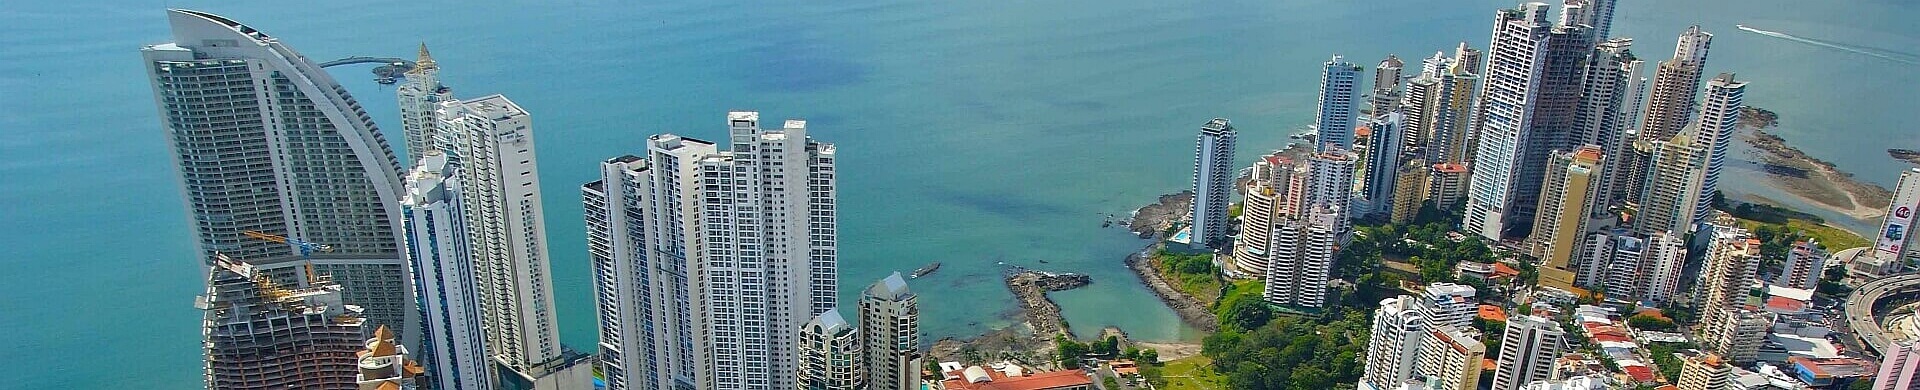 Panorama miasta Panama - tło nagłówka strony